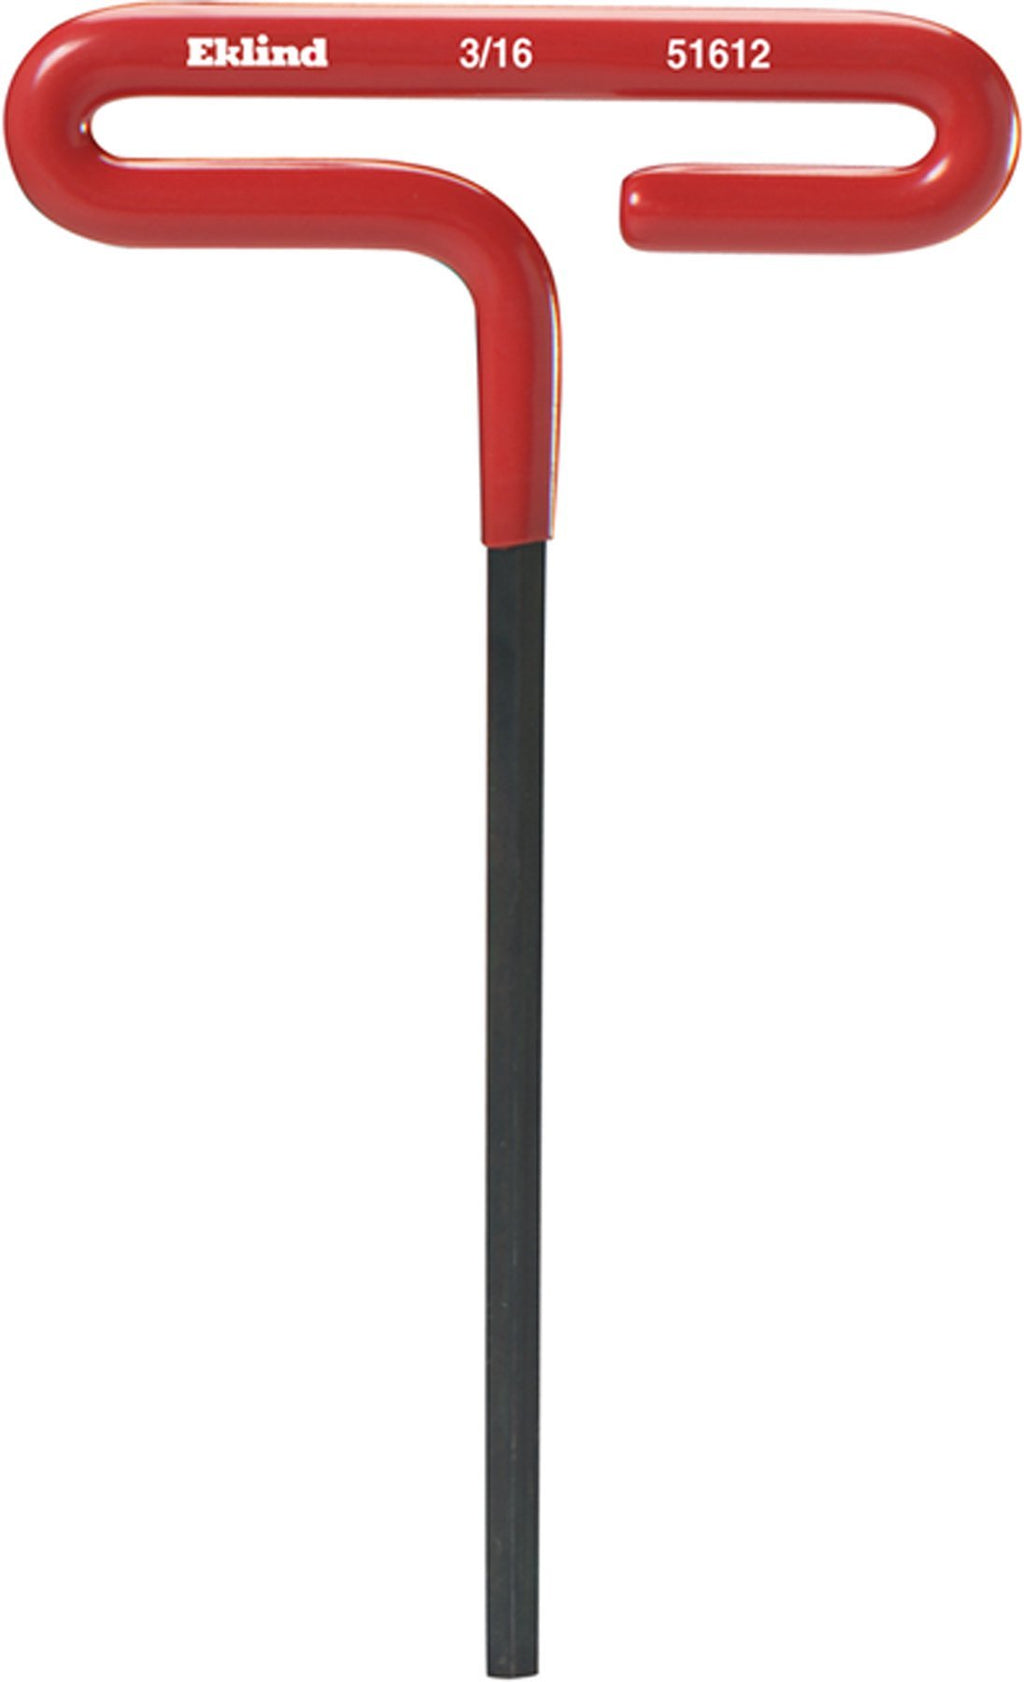  [AUSTRALIA] - EKLIND 51612 3/16 Inch Cushion Grip Hex T-Handle T-Key allen wrench 3/16"